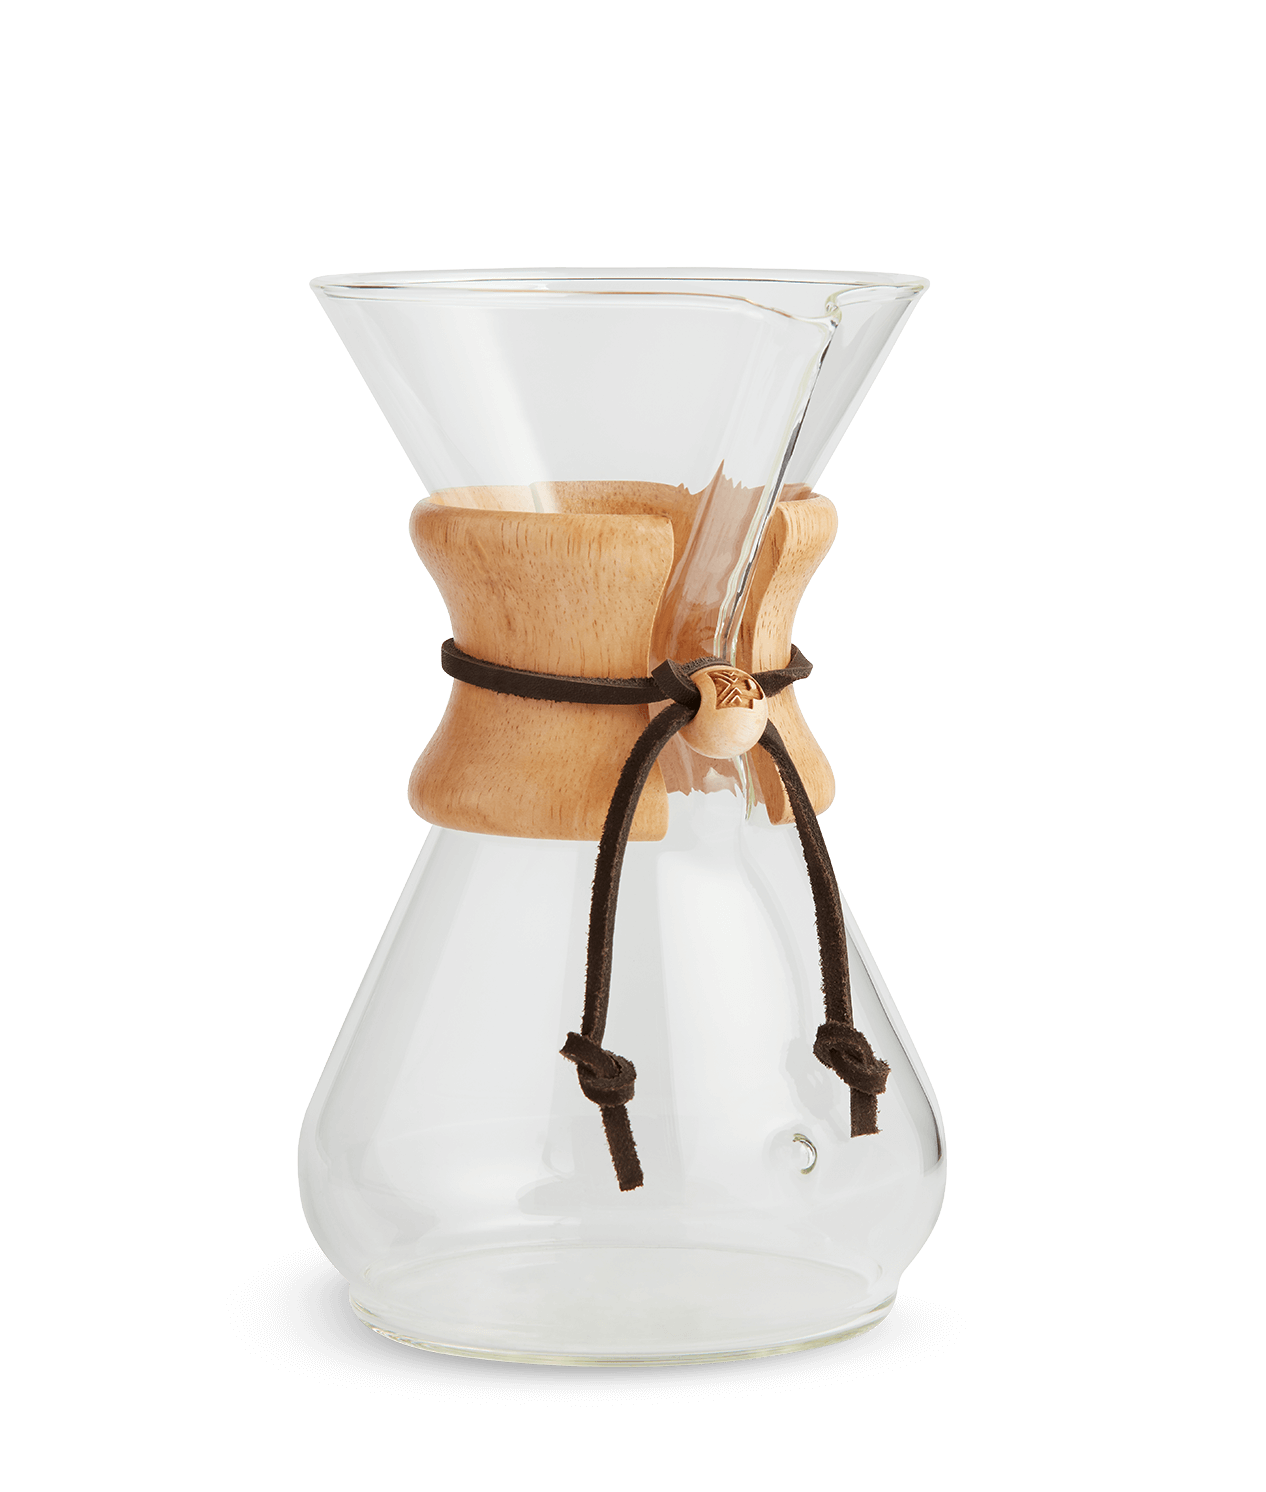 Chemex Coffee Maker – Naked Coffee